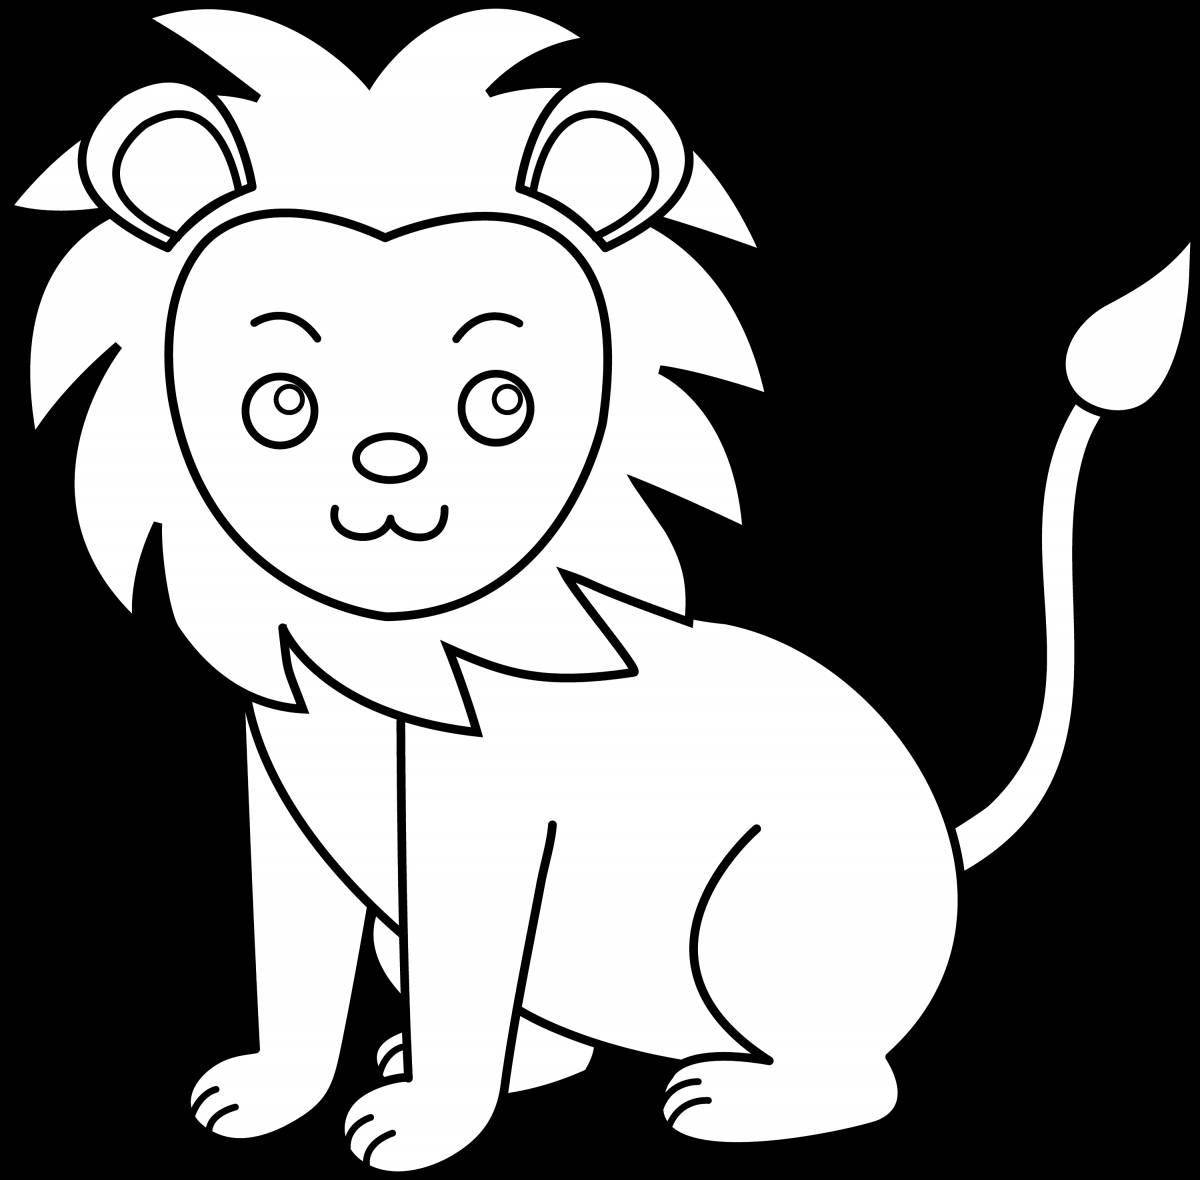 Impressive lion coloring page for kids